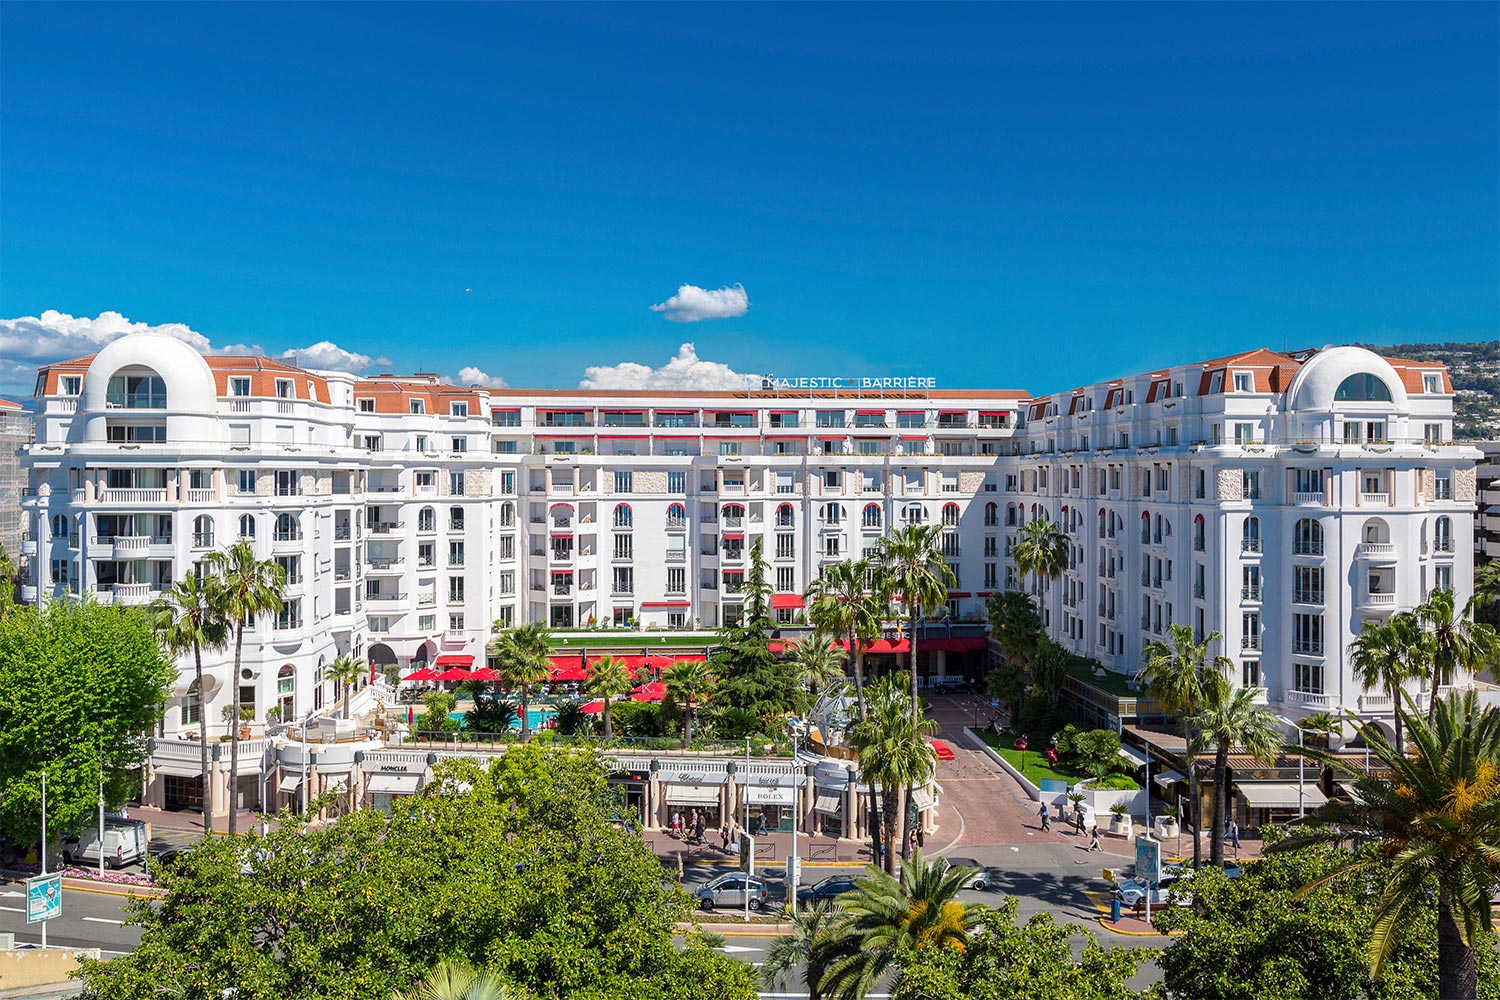 Hôtel Barrière Le Majestic in Cannes, France